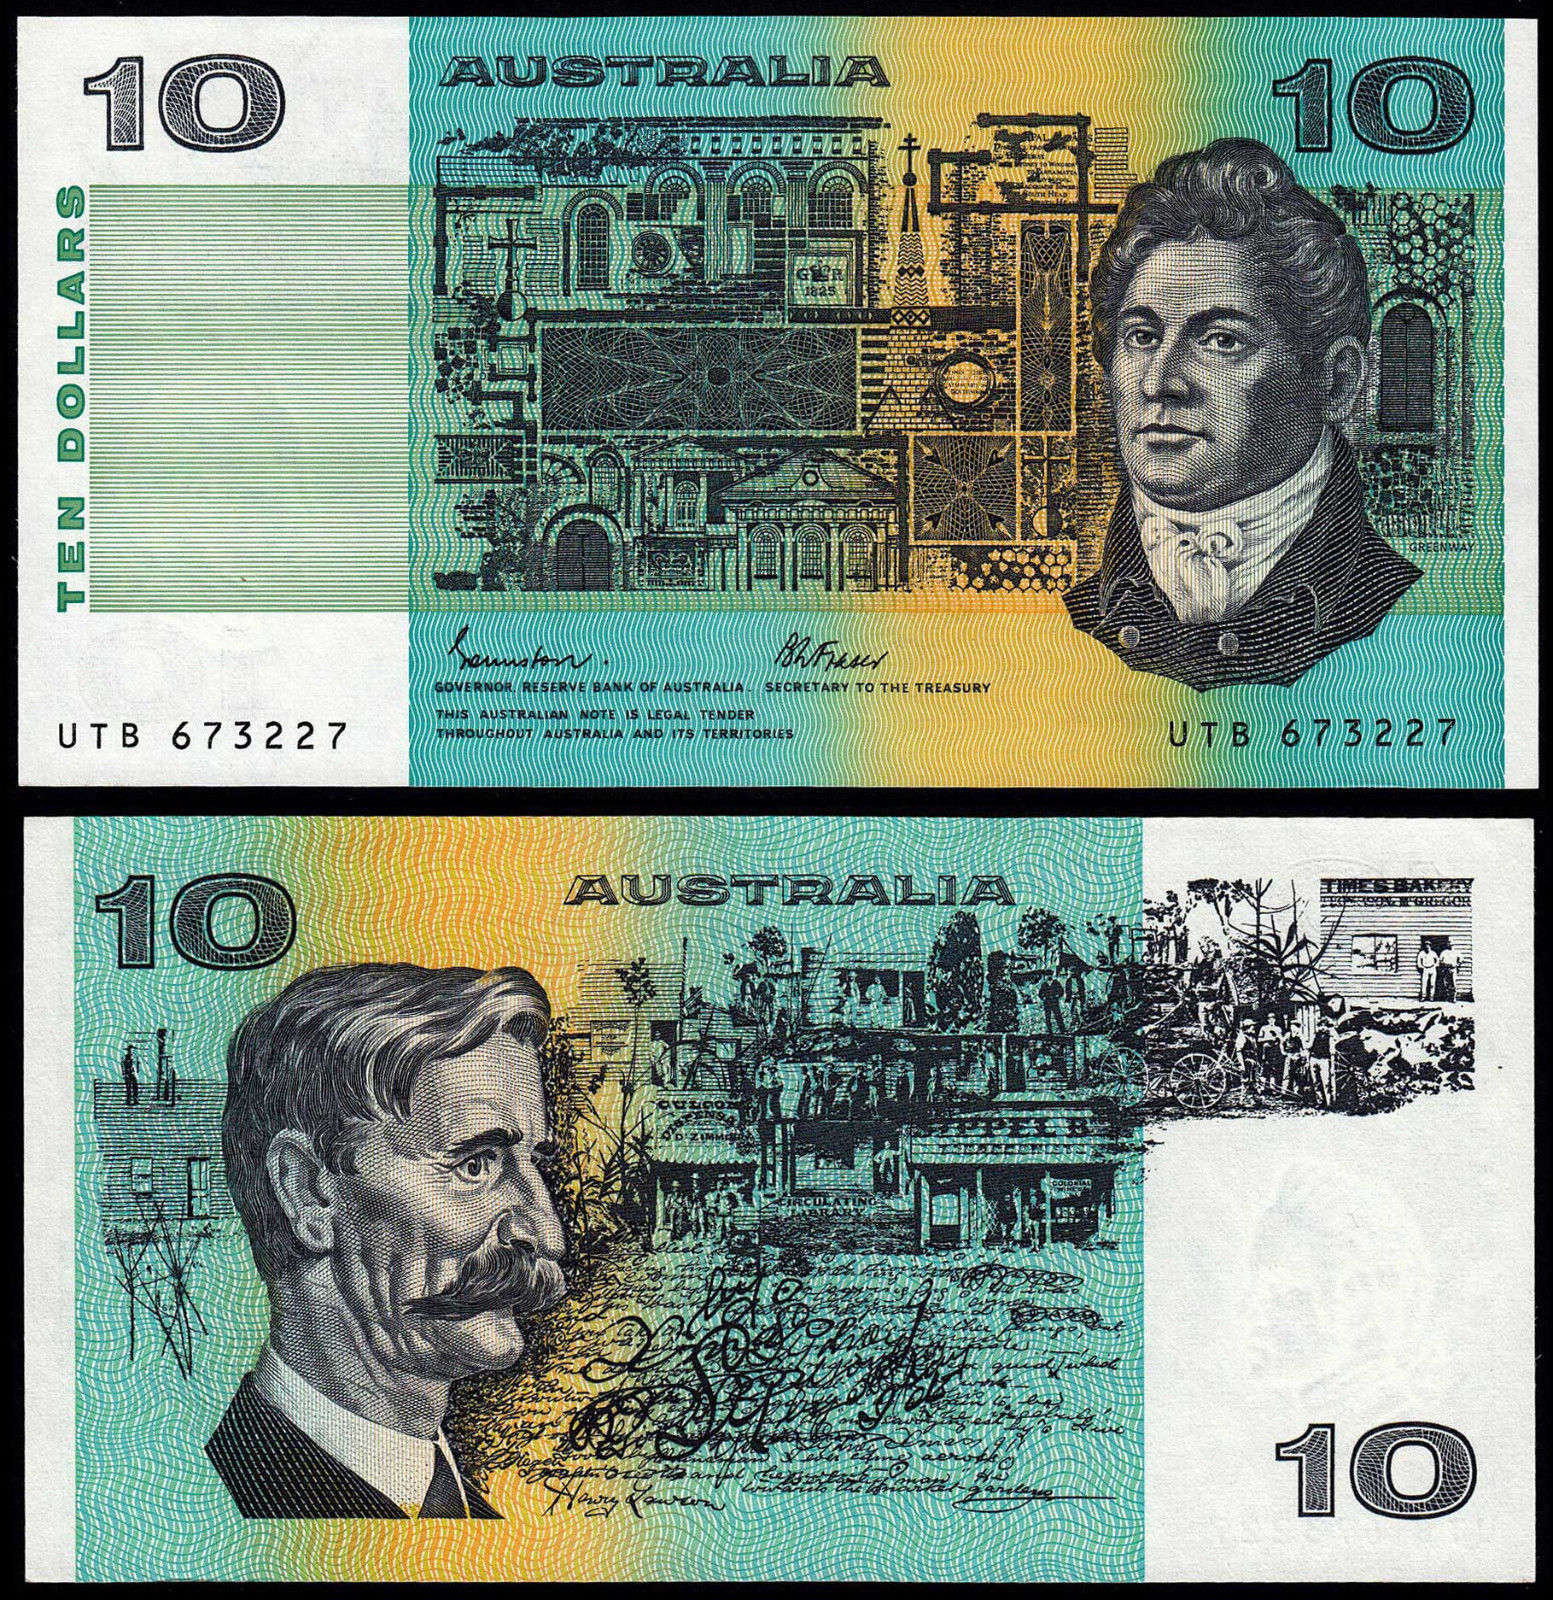 10 dollars Australia 1985